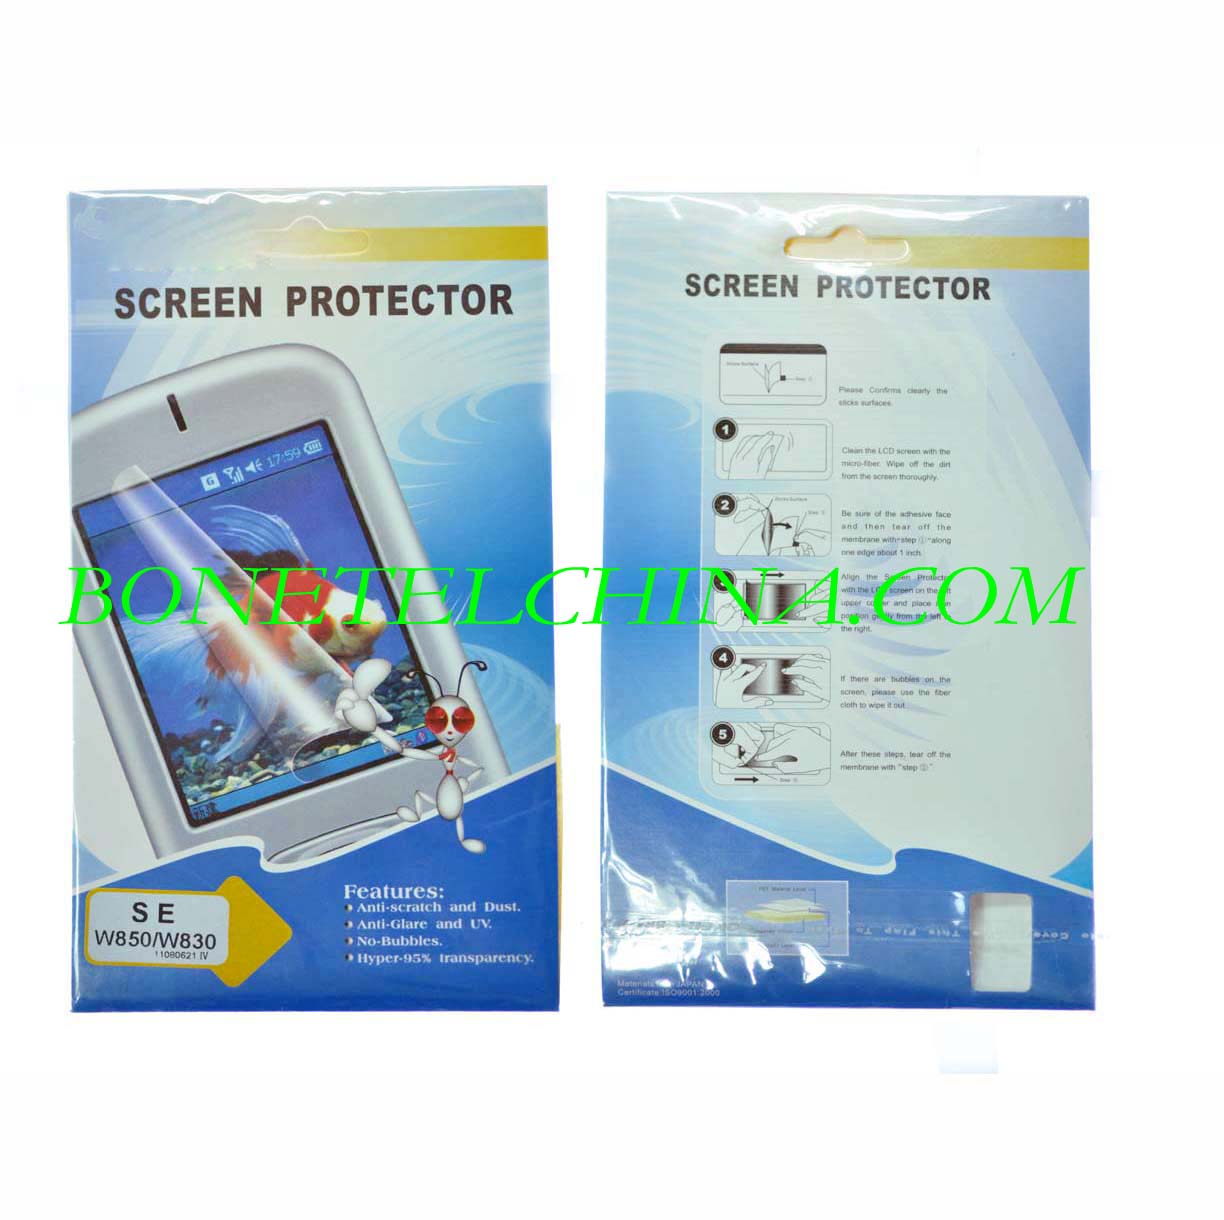 Sony Ericsson screen protector W850, W830